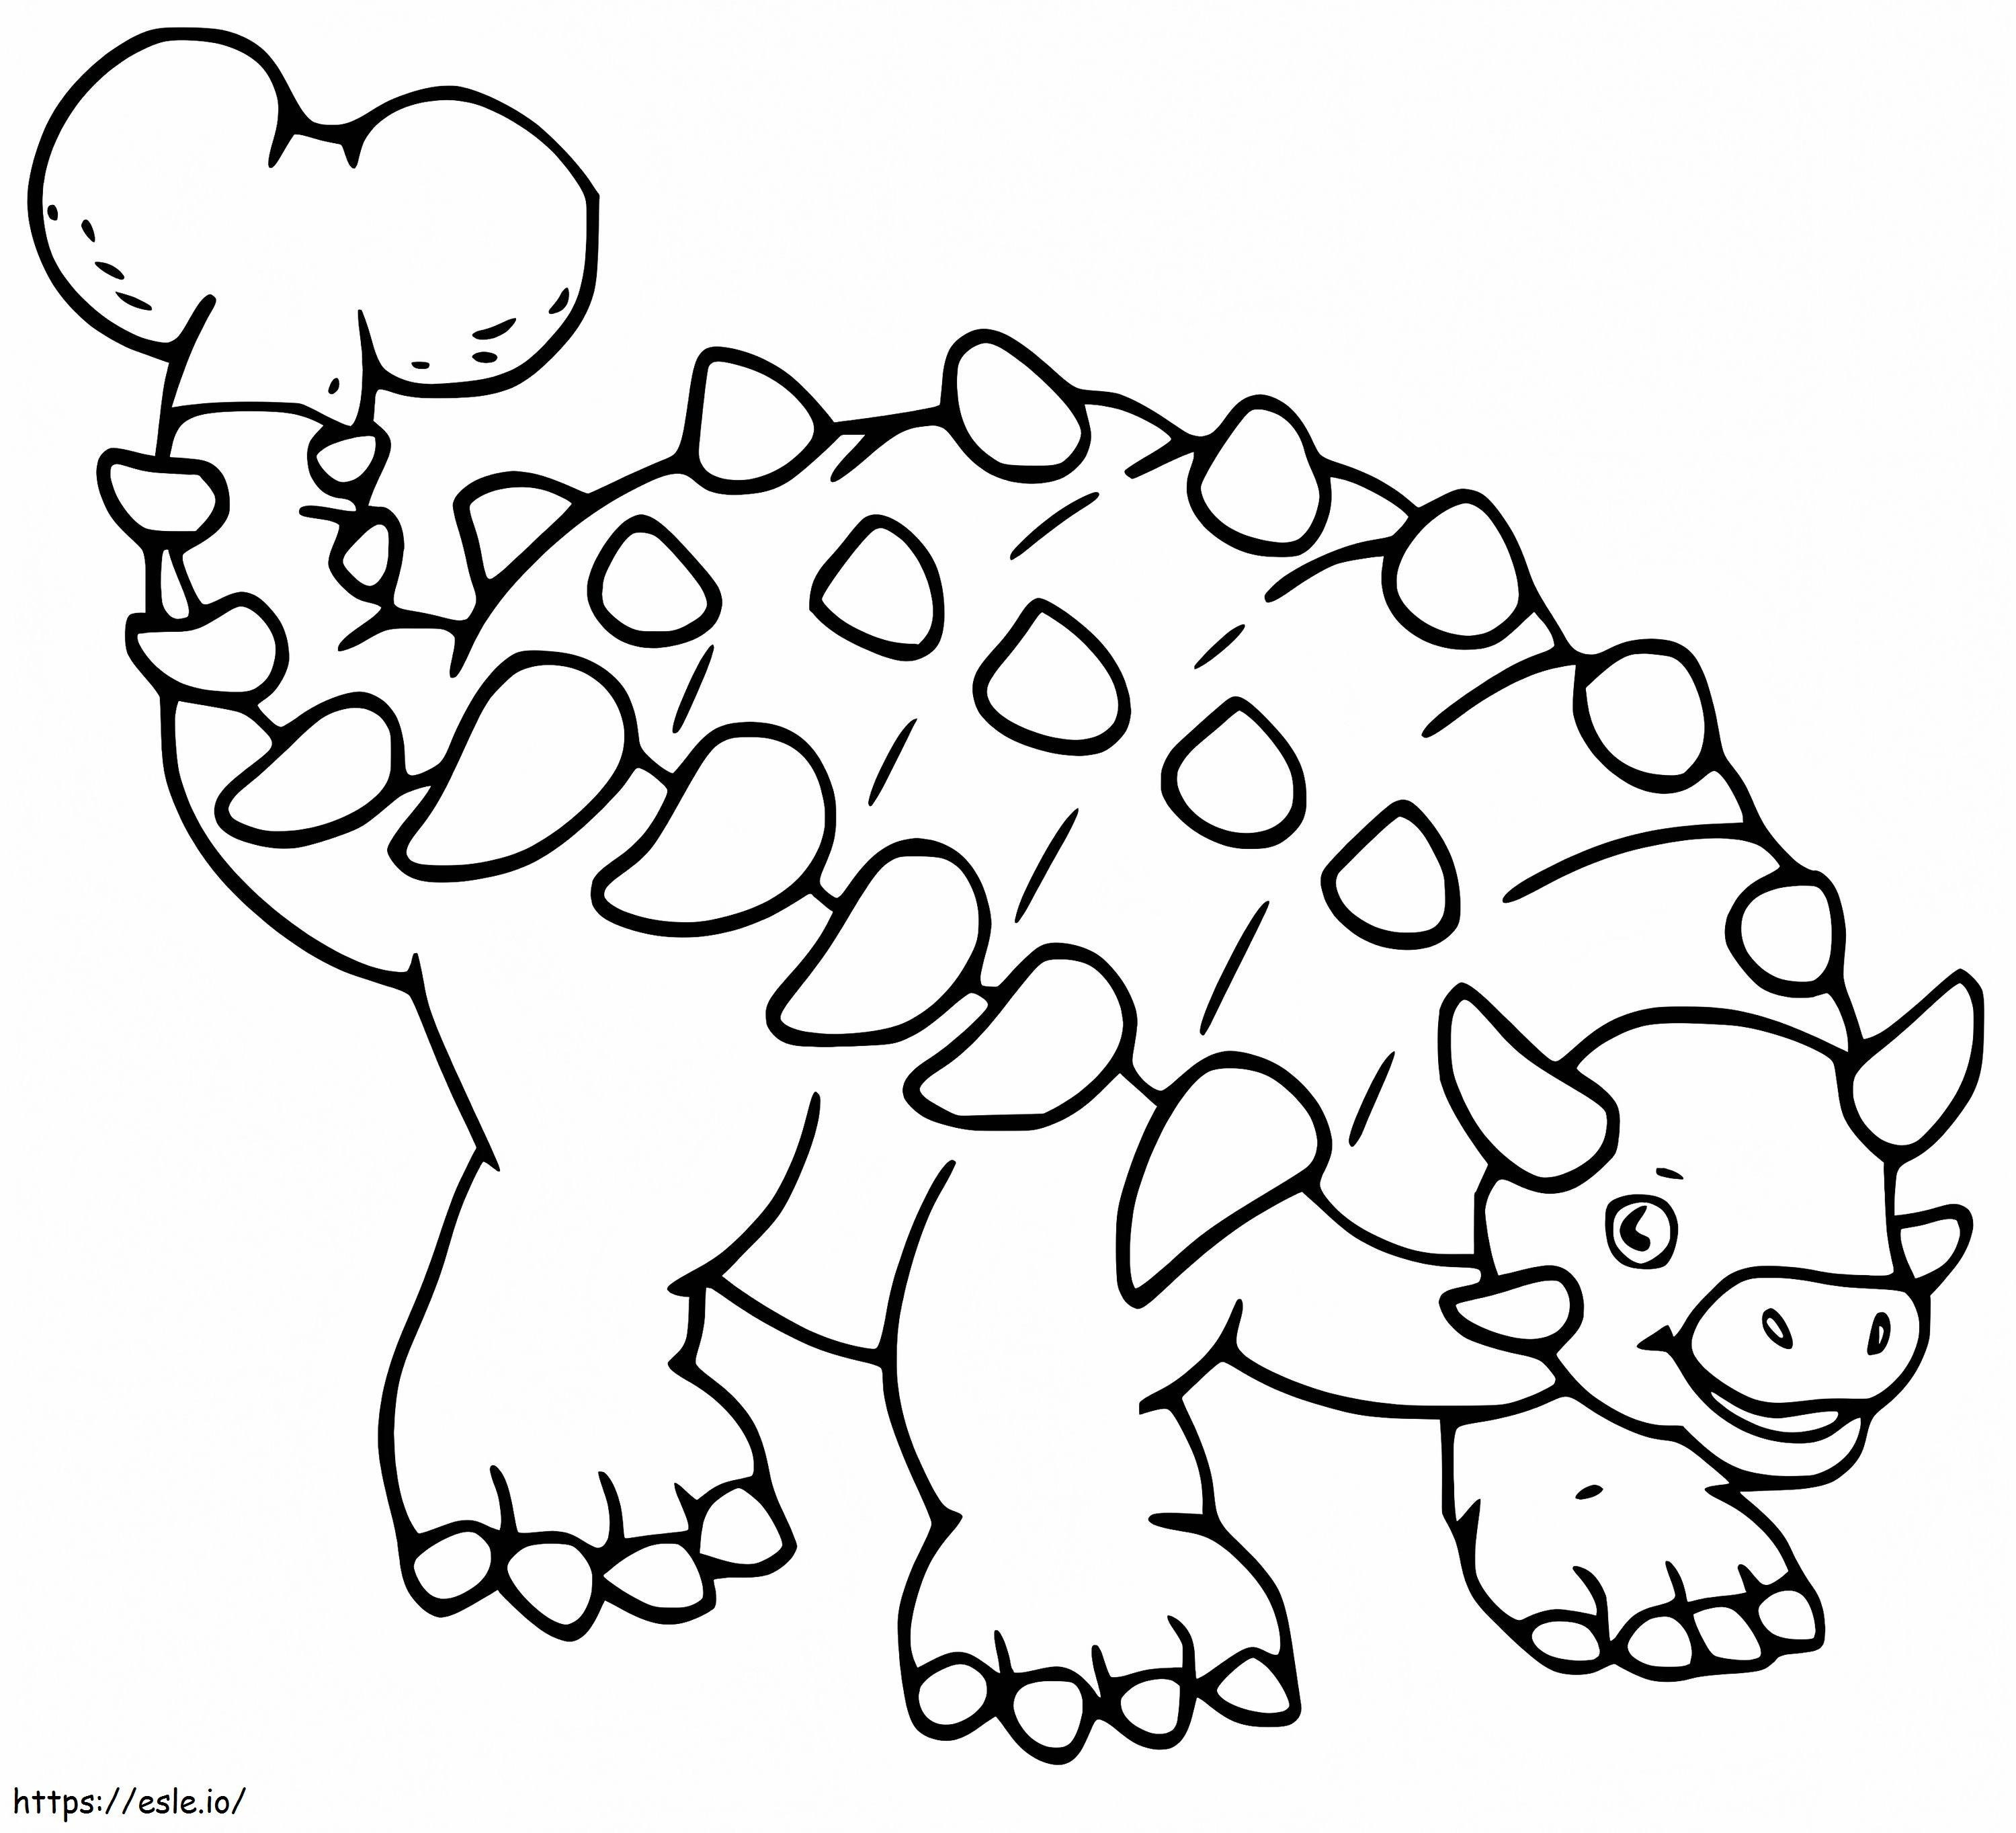 Adorable Ankylosaurus coloring page